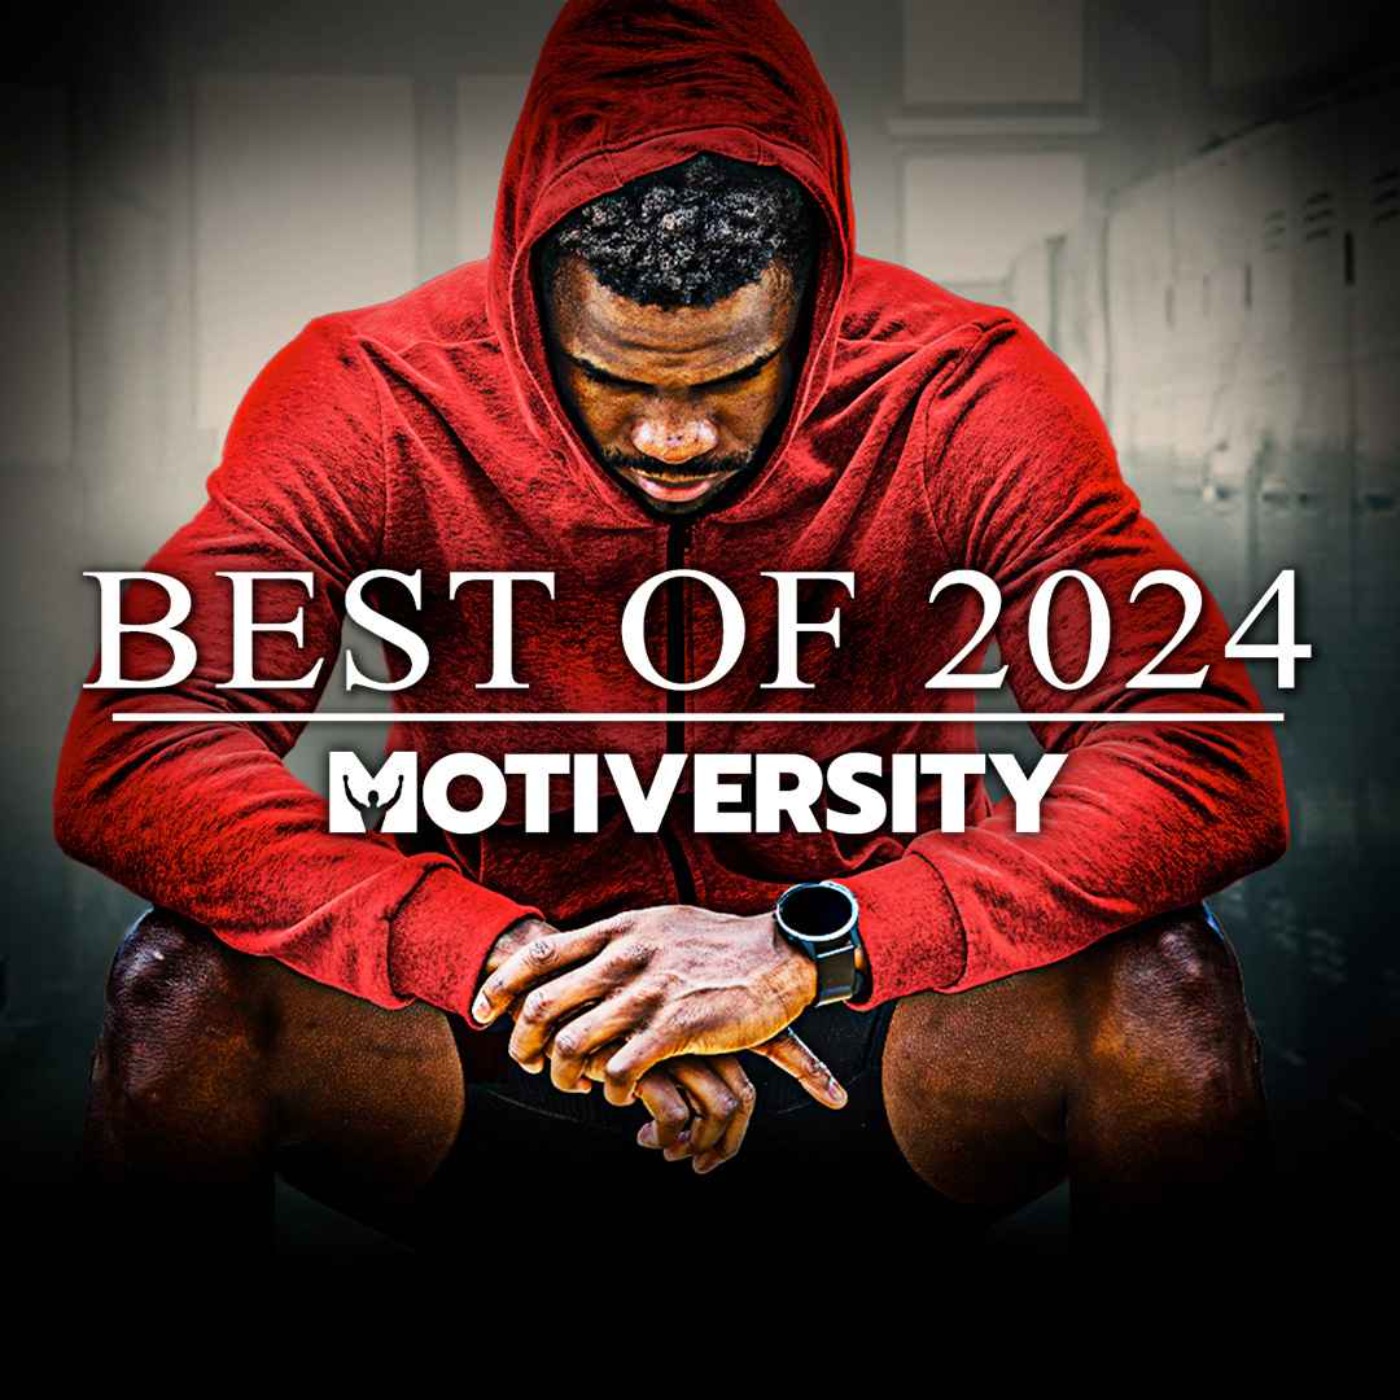 MOTIVERSITY - BEST OF 2024 (So Far) | Best Motivational Speeches Compilation 2 Hours Long